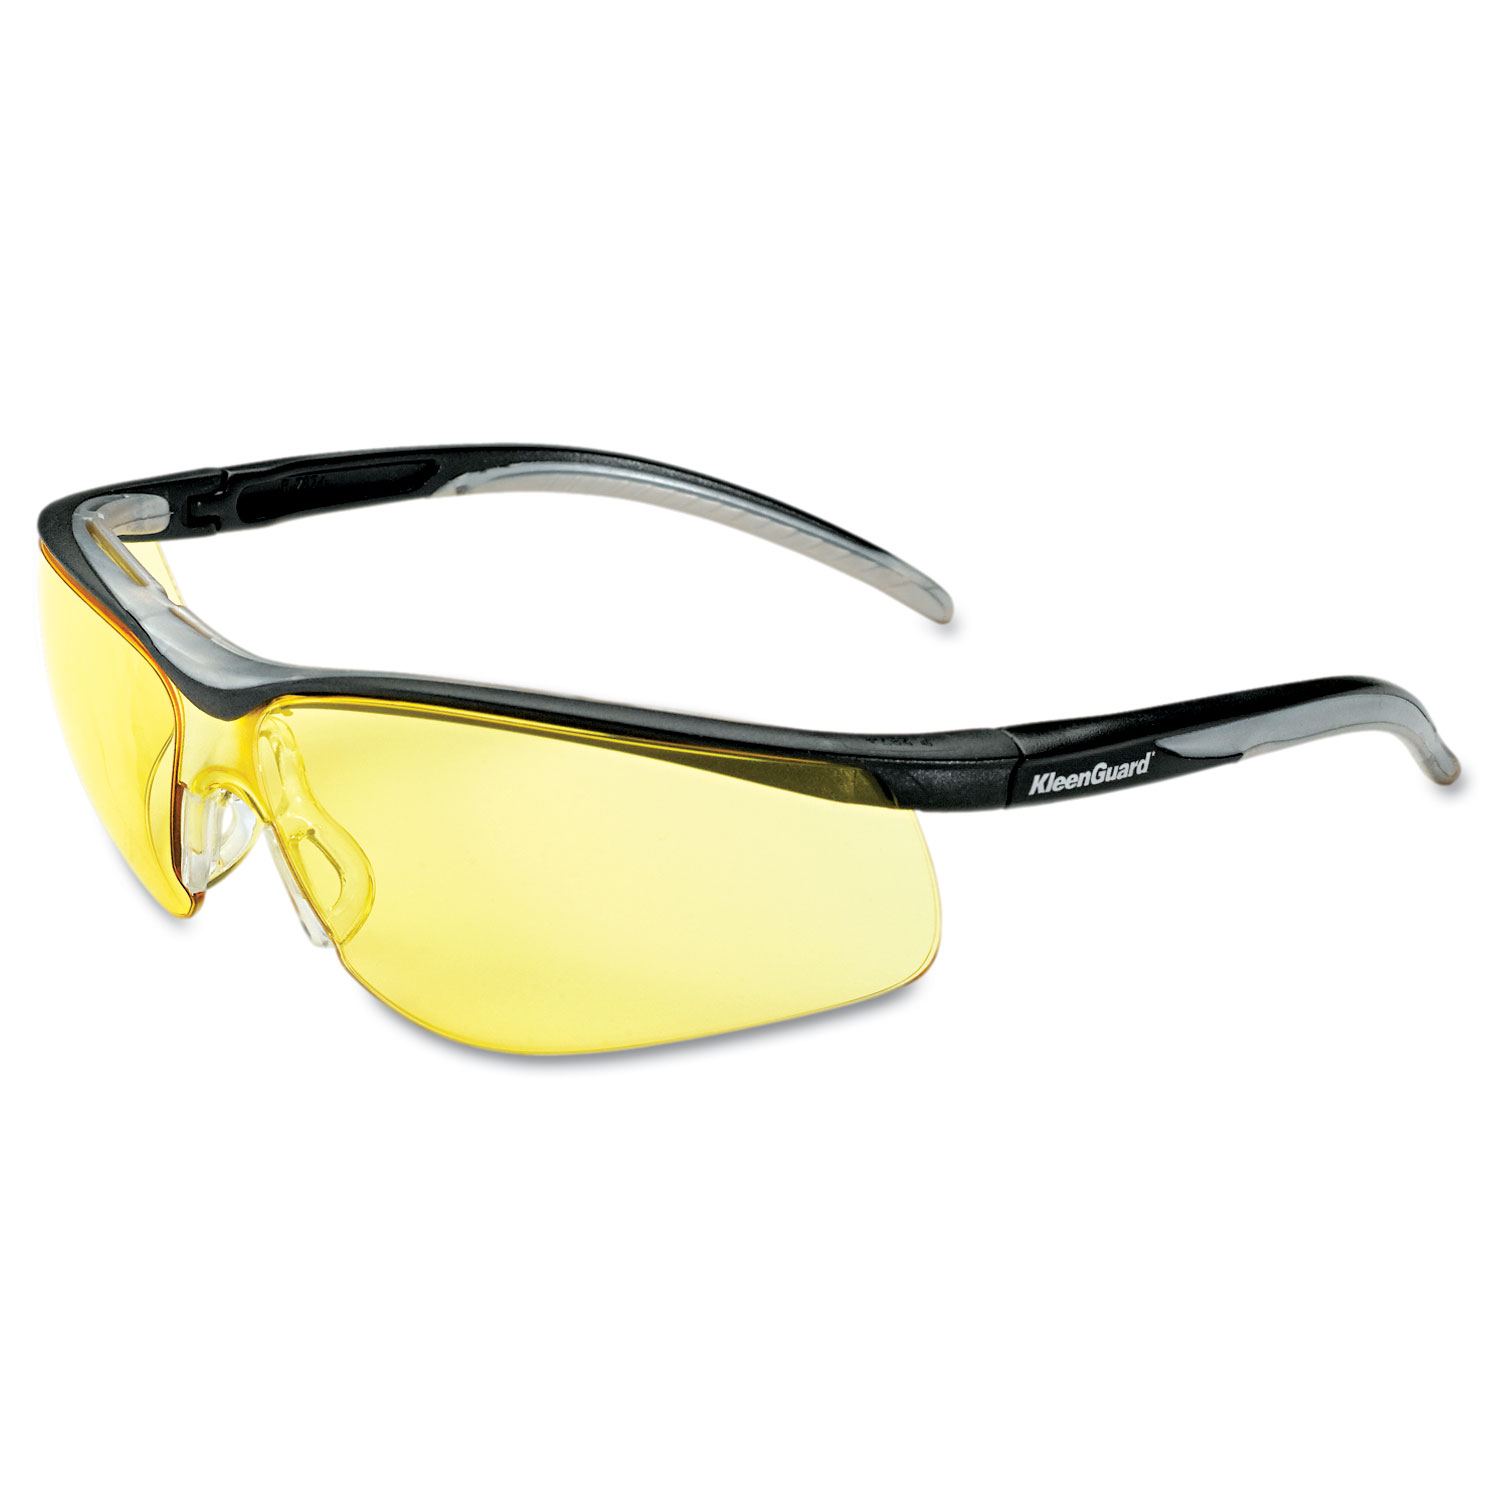 V40 Contour Eye Protection, Black Frame/Amber Lens